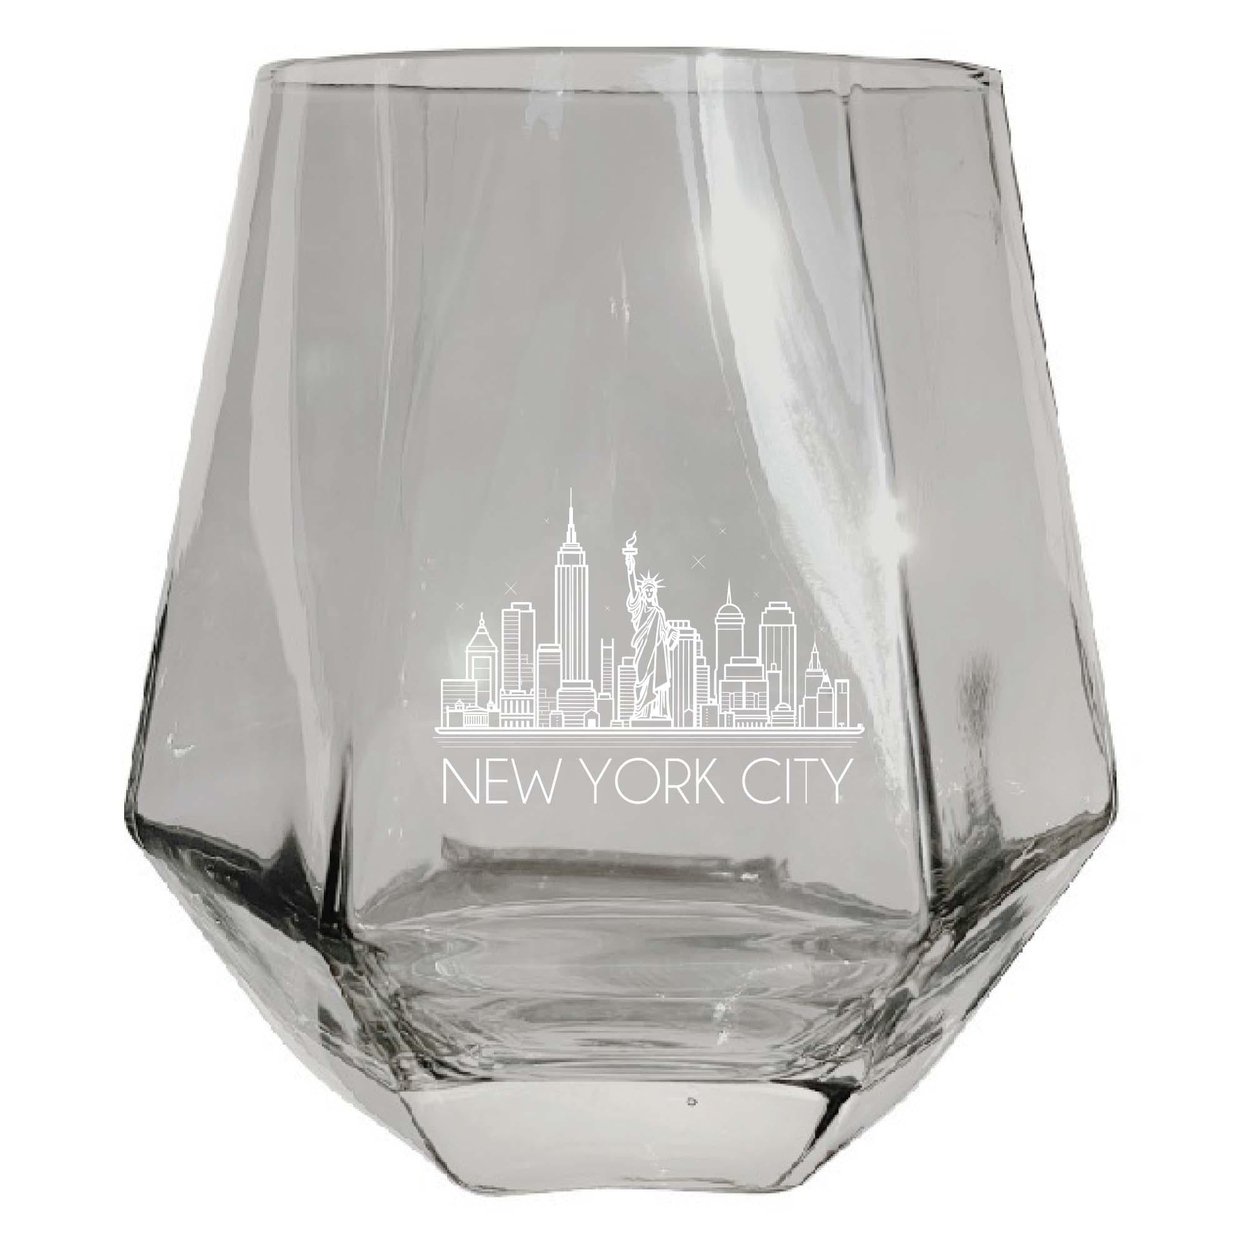 New York City Souvenir Wine Glass EngravedDiamond 15 Oz - Iridescent,,Single Unit